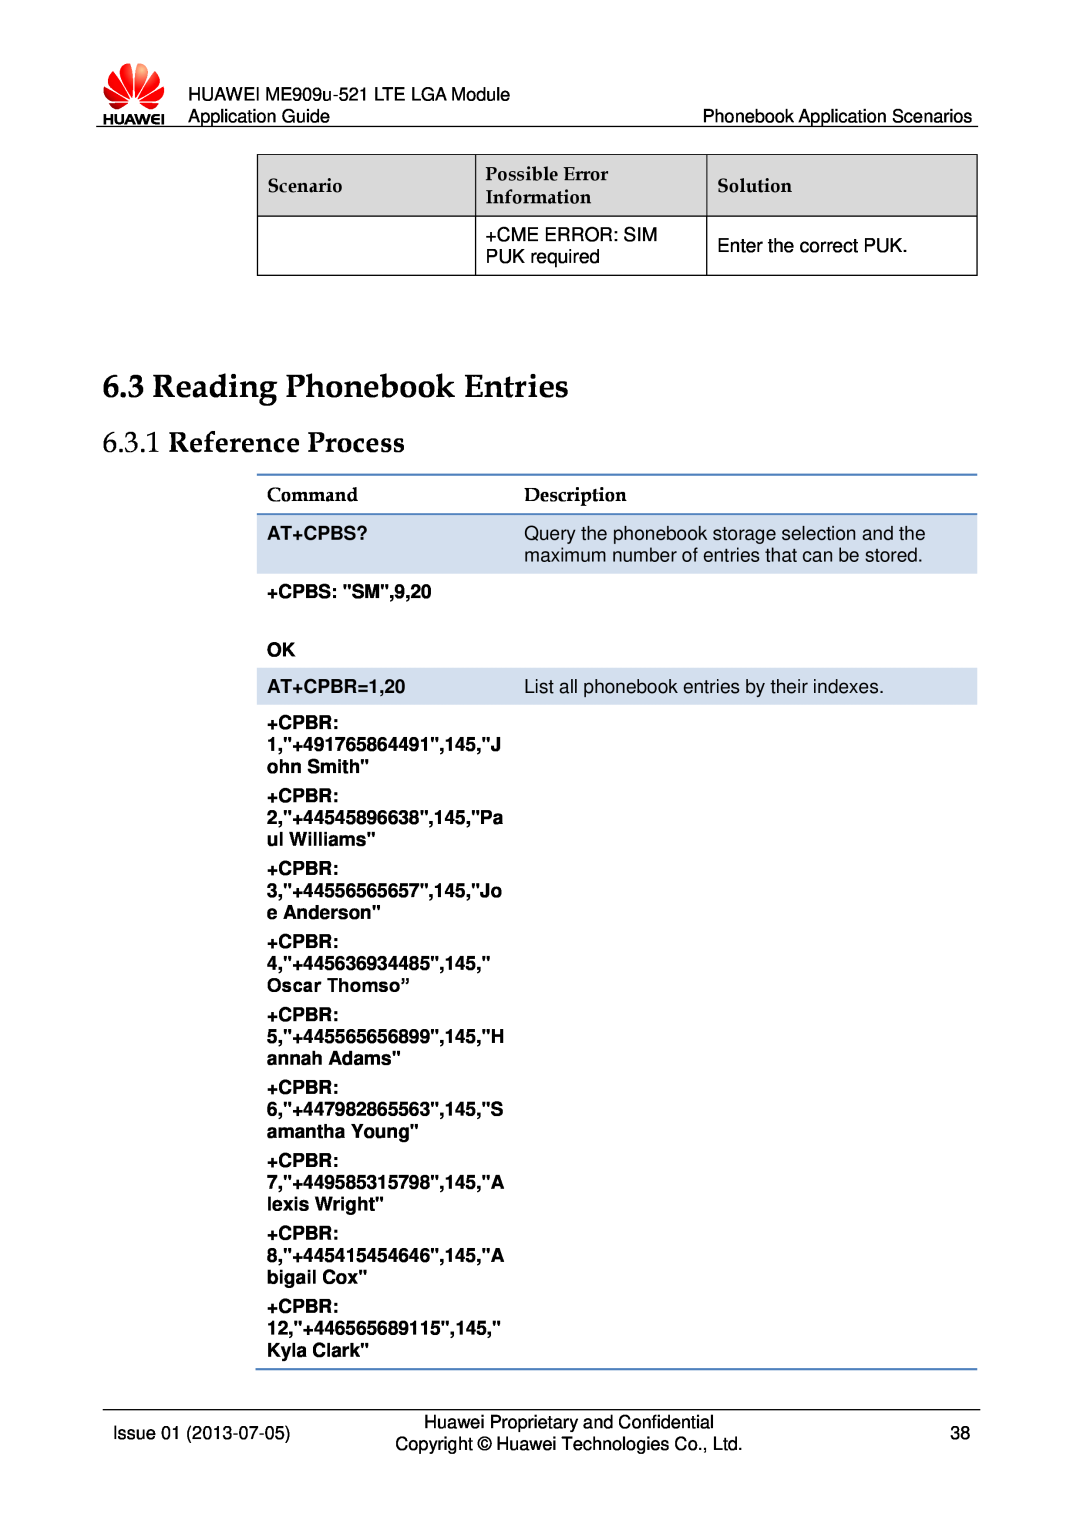 Huawei ME909u-521 manual Reading Phonebook Entries, Reference Process 